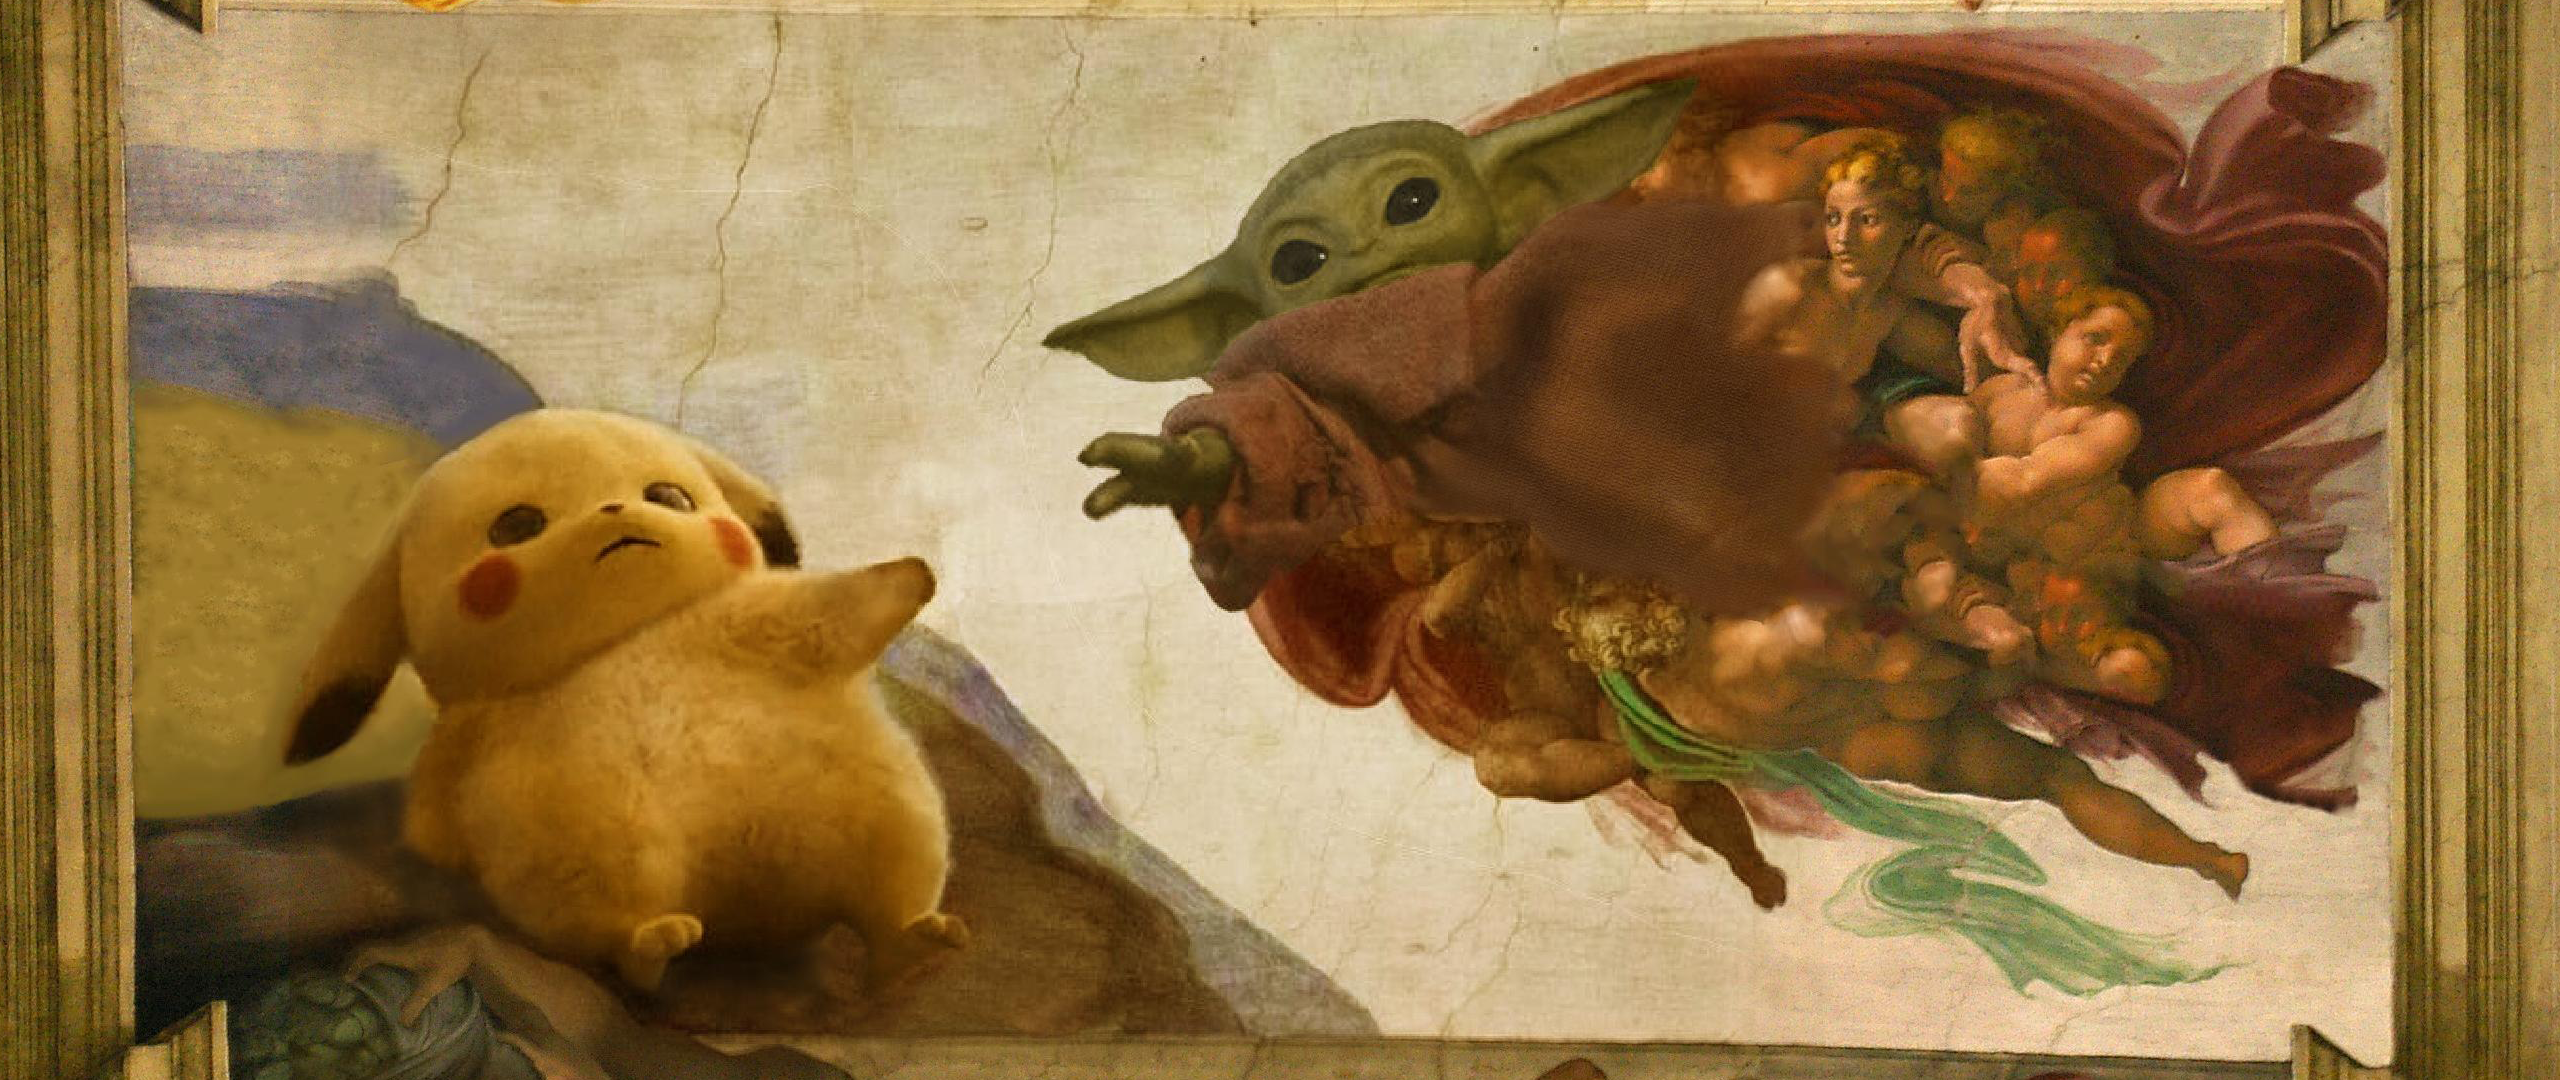 Baby Yoda and Pikachu (2560x1080)